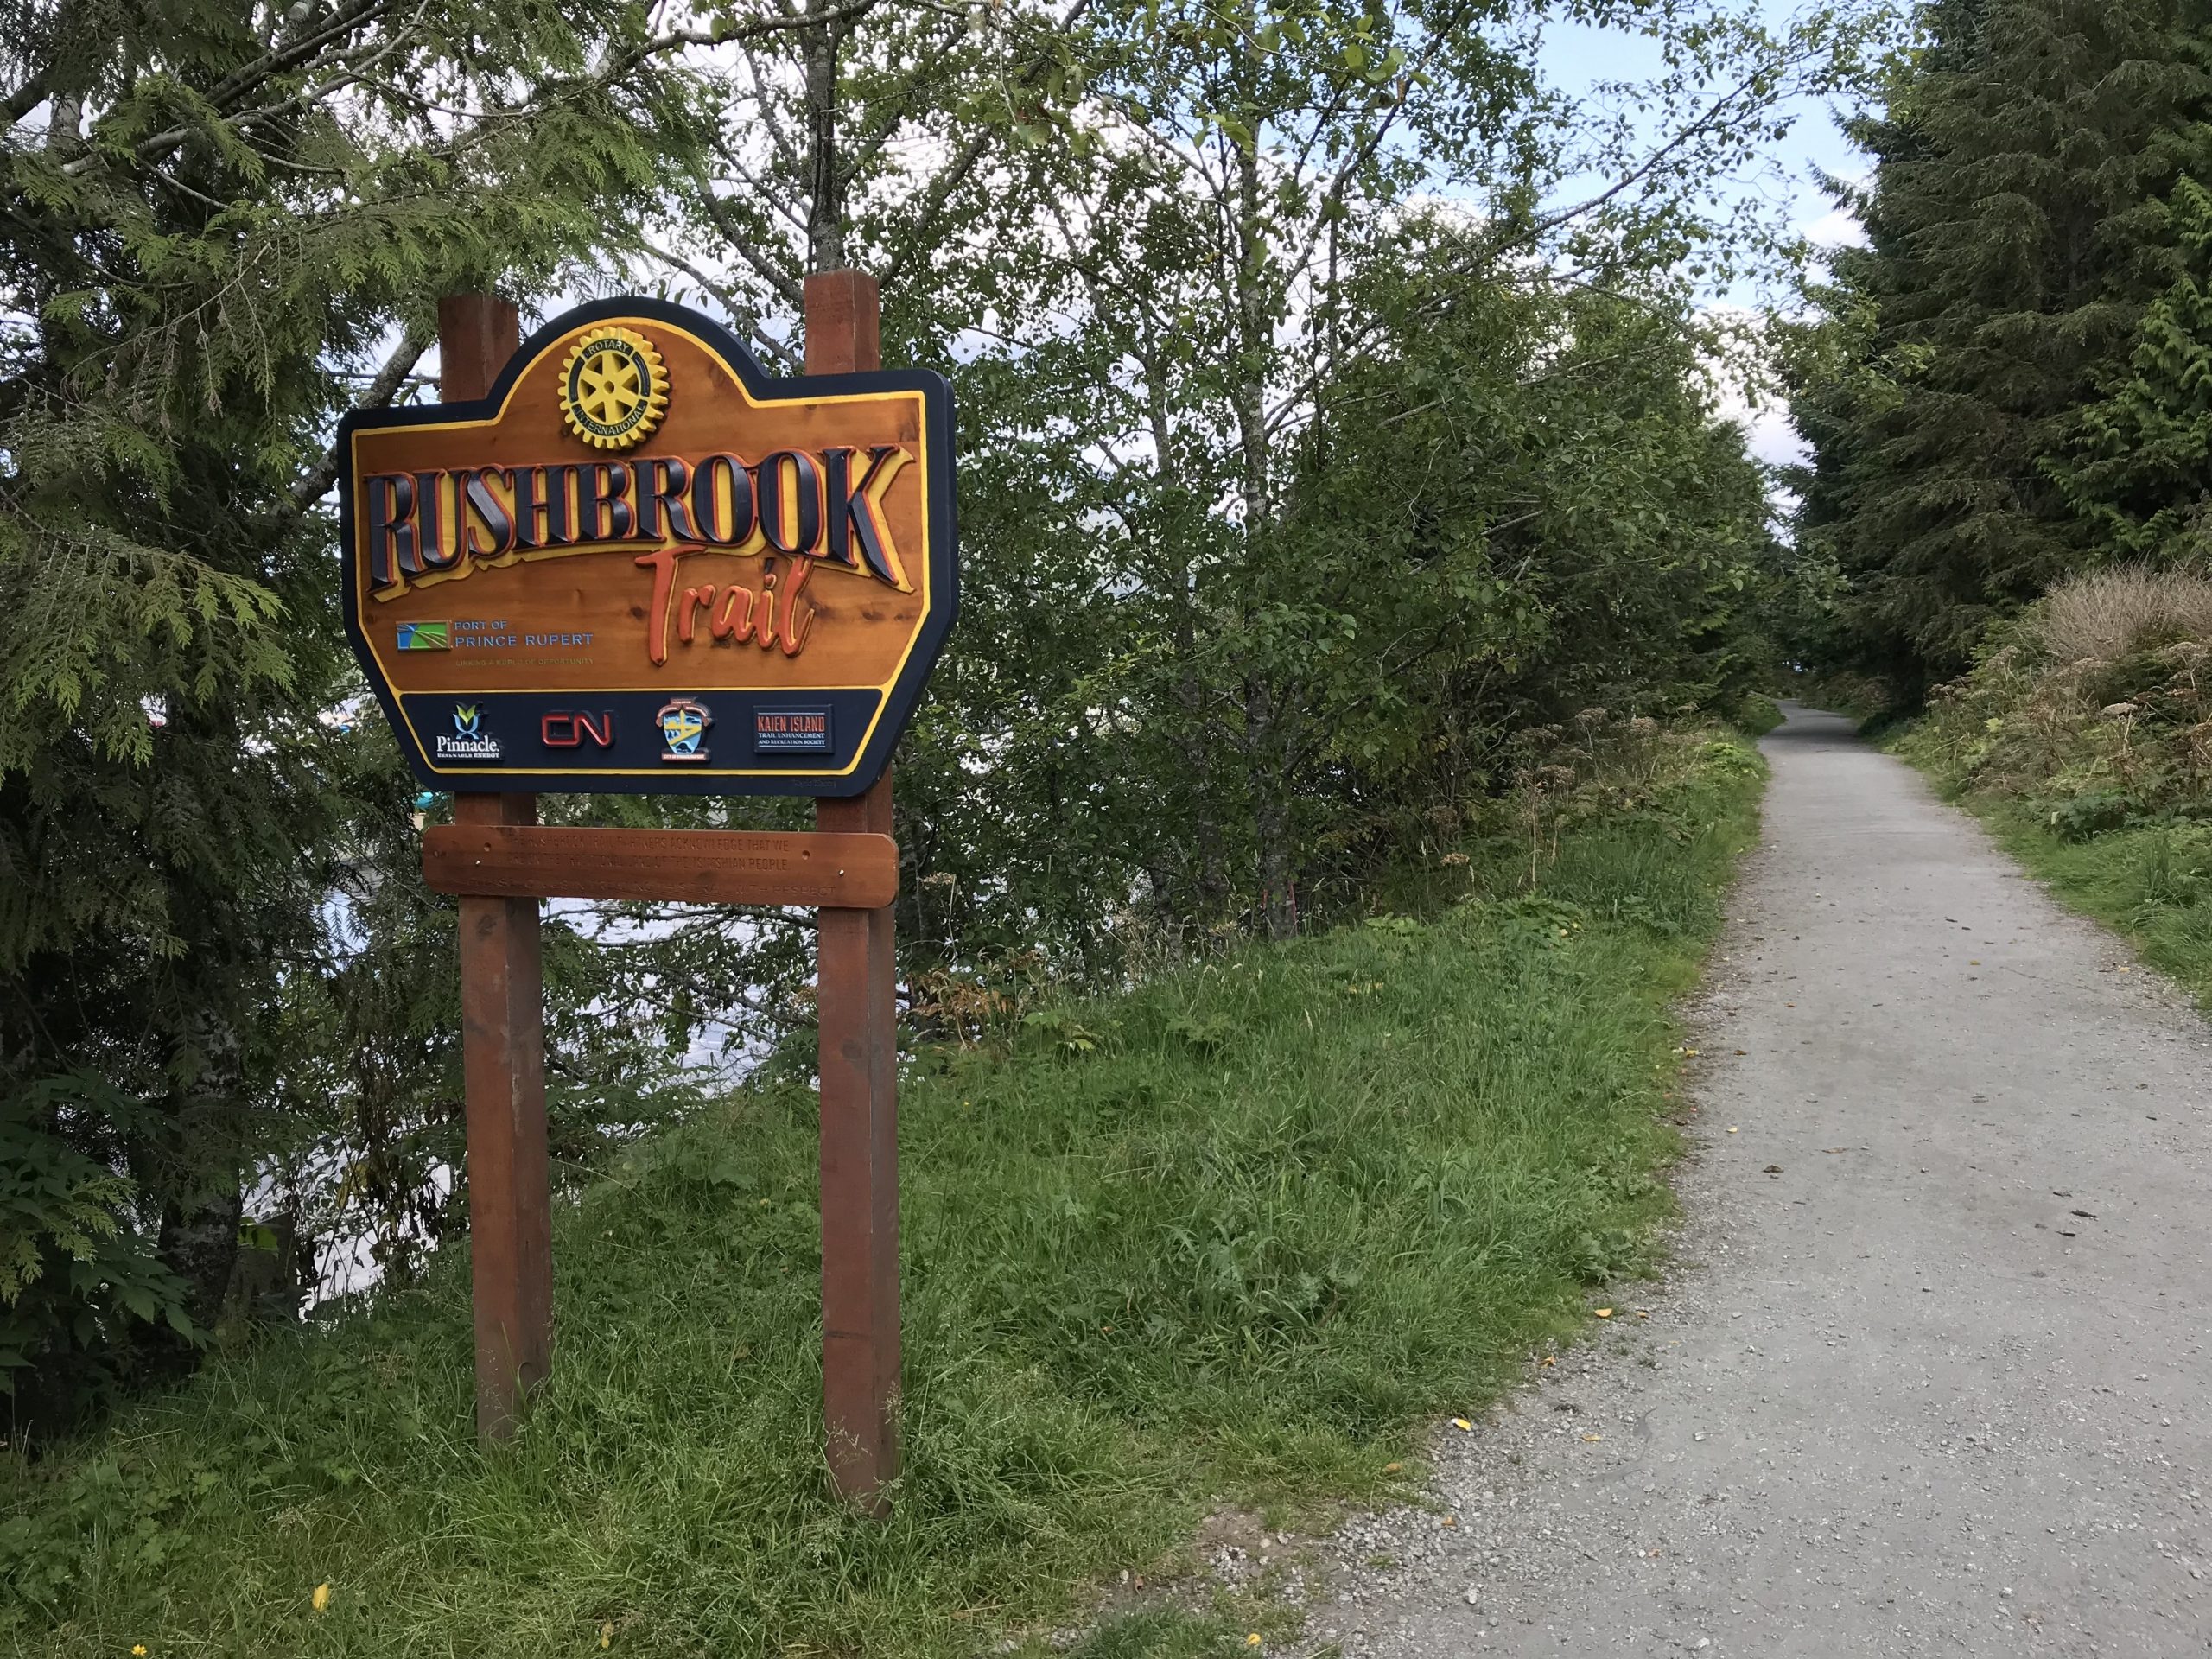 Rushbrook trail